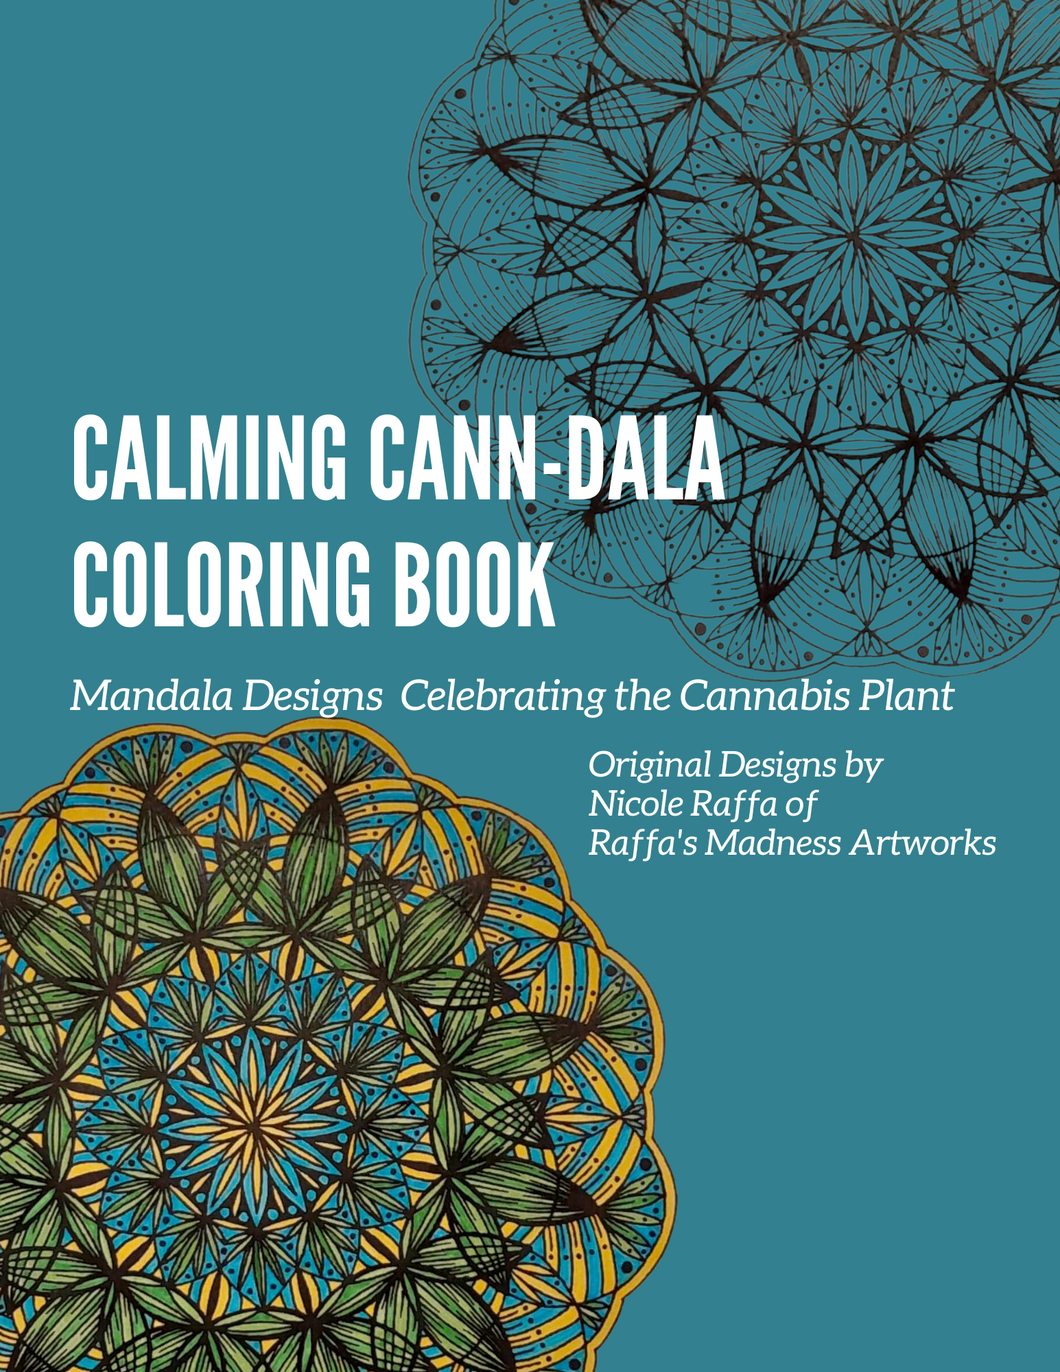 Calming Cann-dala Coloring Book